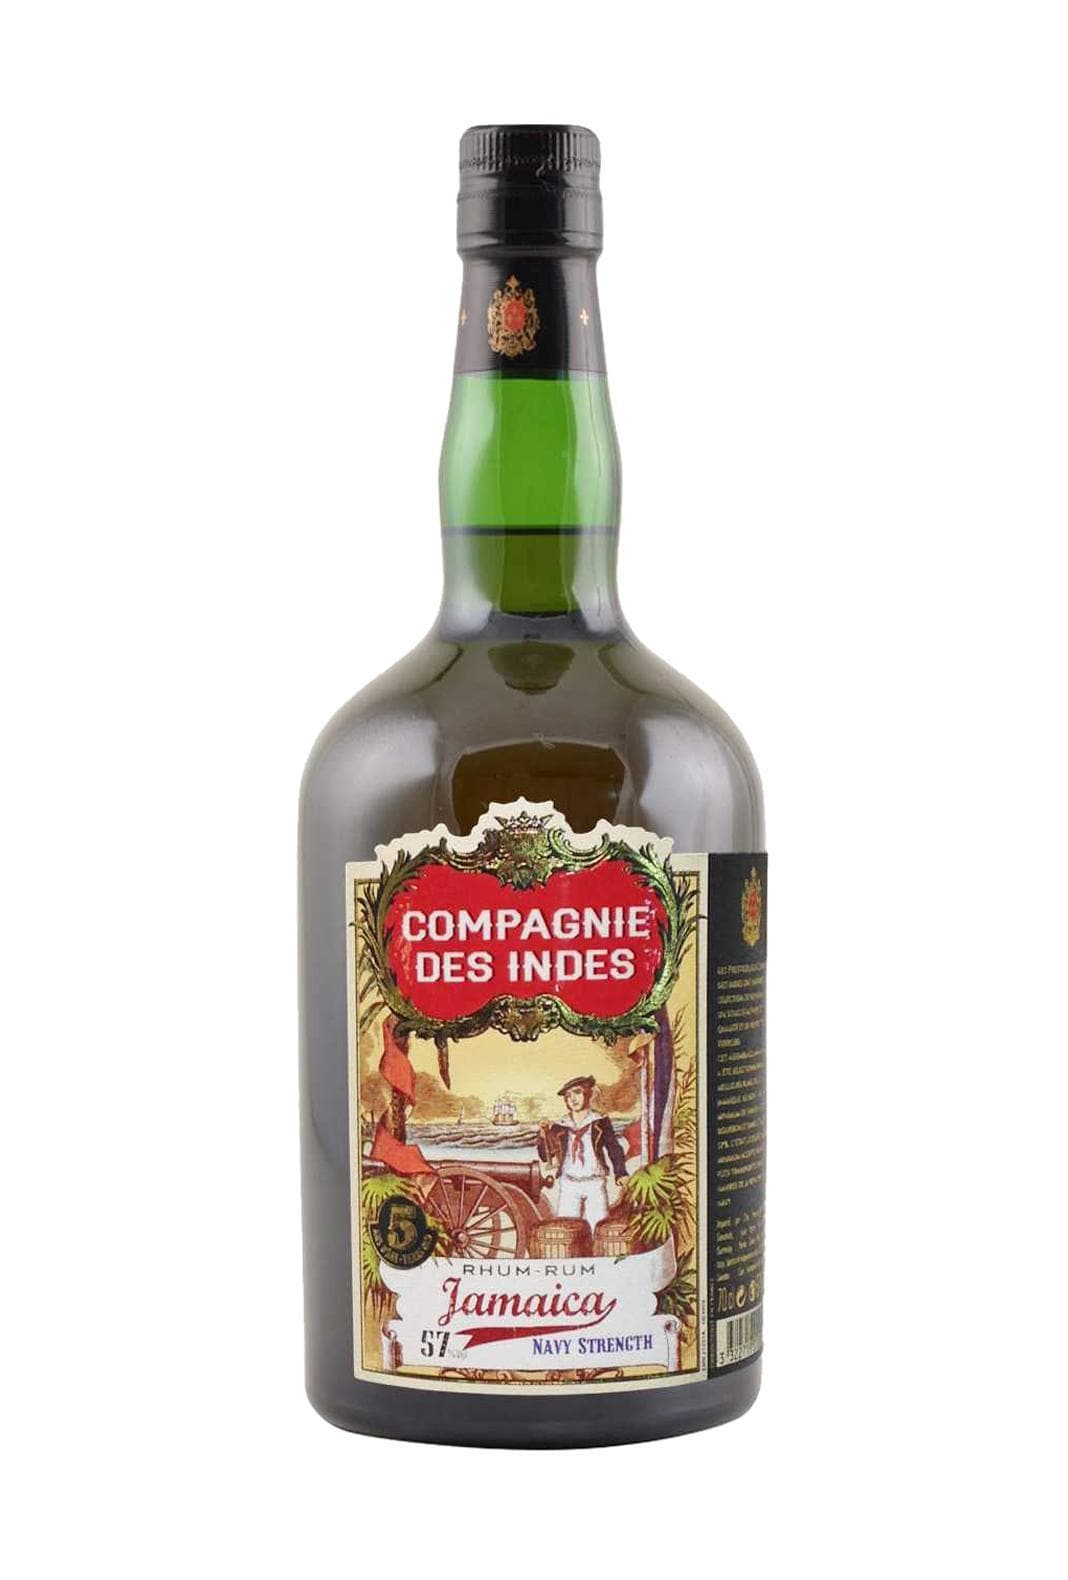 Compagnie des Indes Rum Jamaica Navy strength 5 years 57% 700ml | Rum | Shop online at Spirits of France